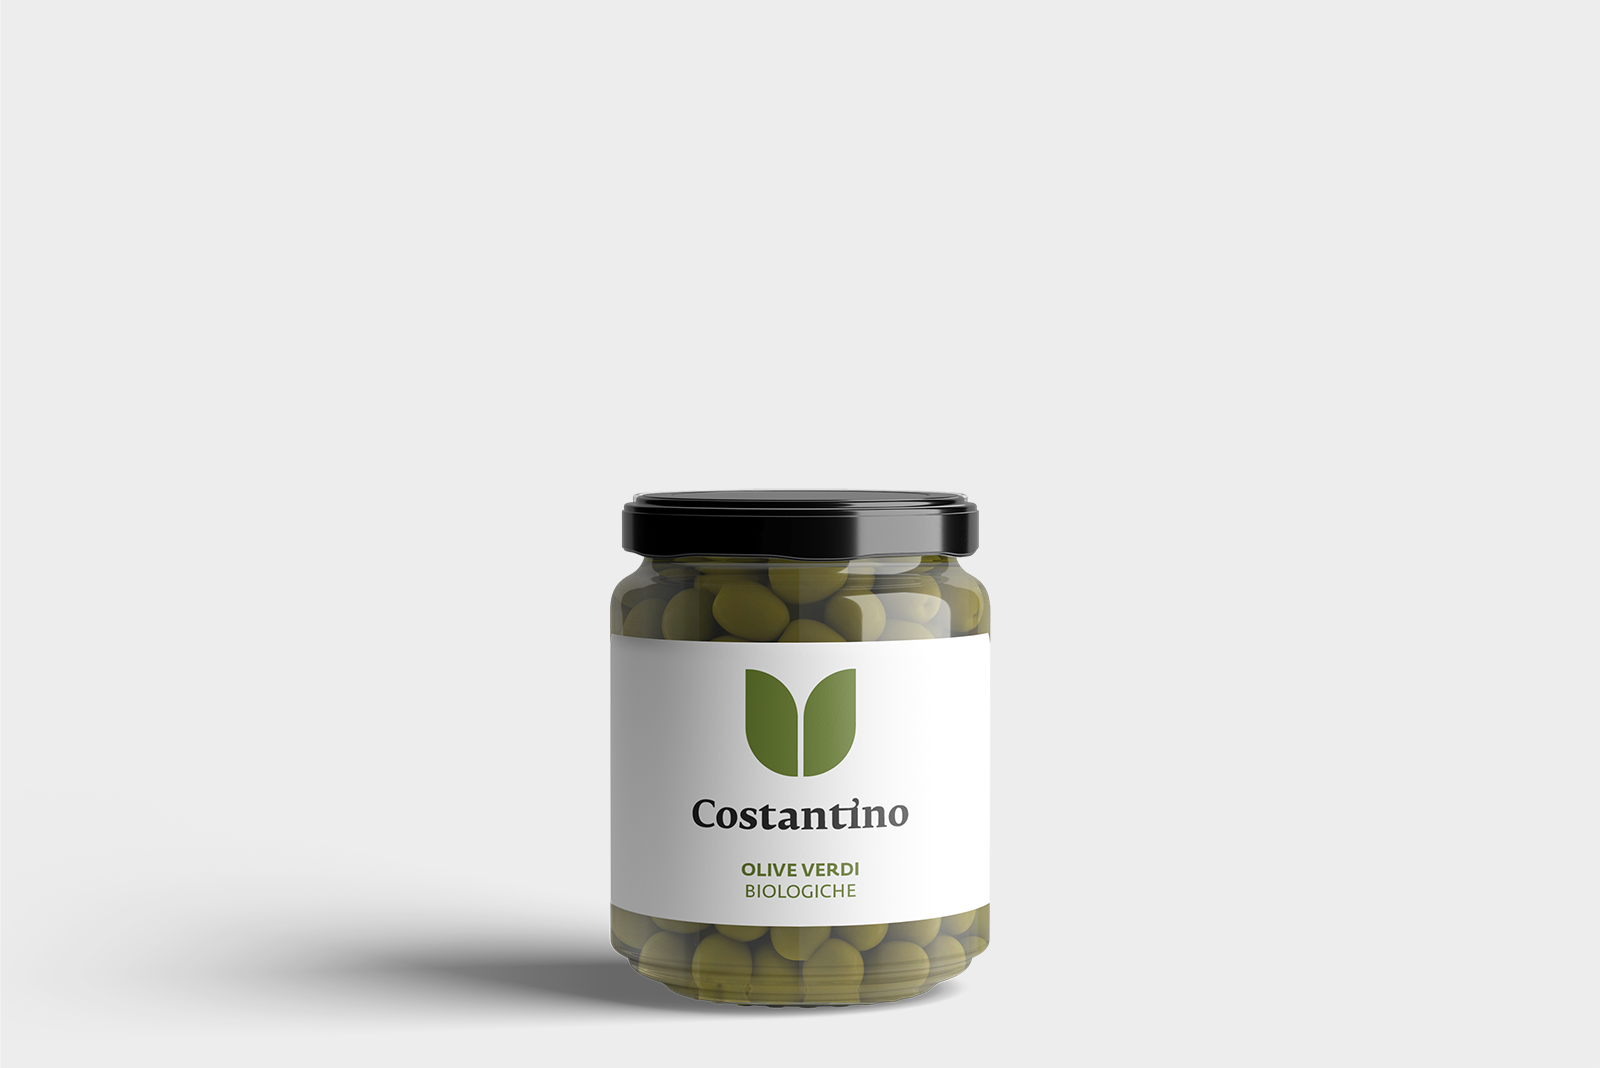 Costantino - Olive verdi biologiche - vasetto 330g